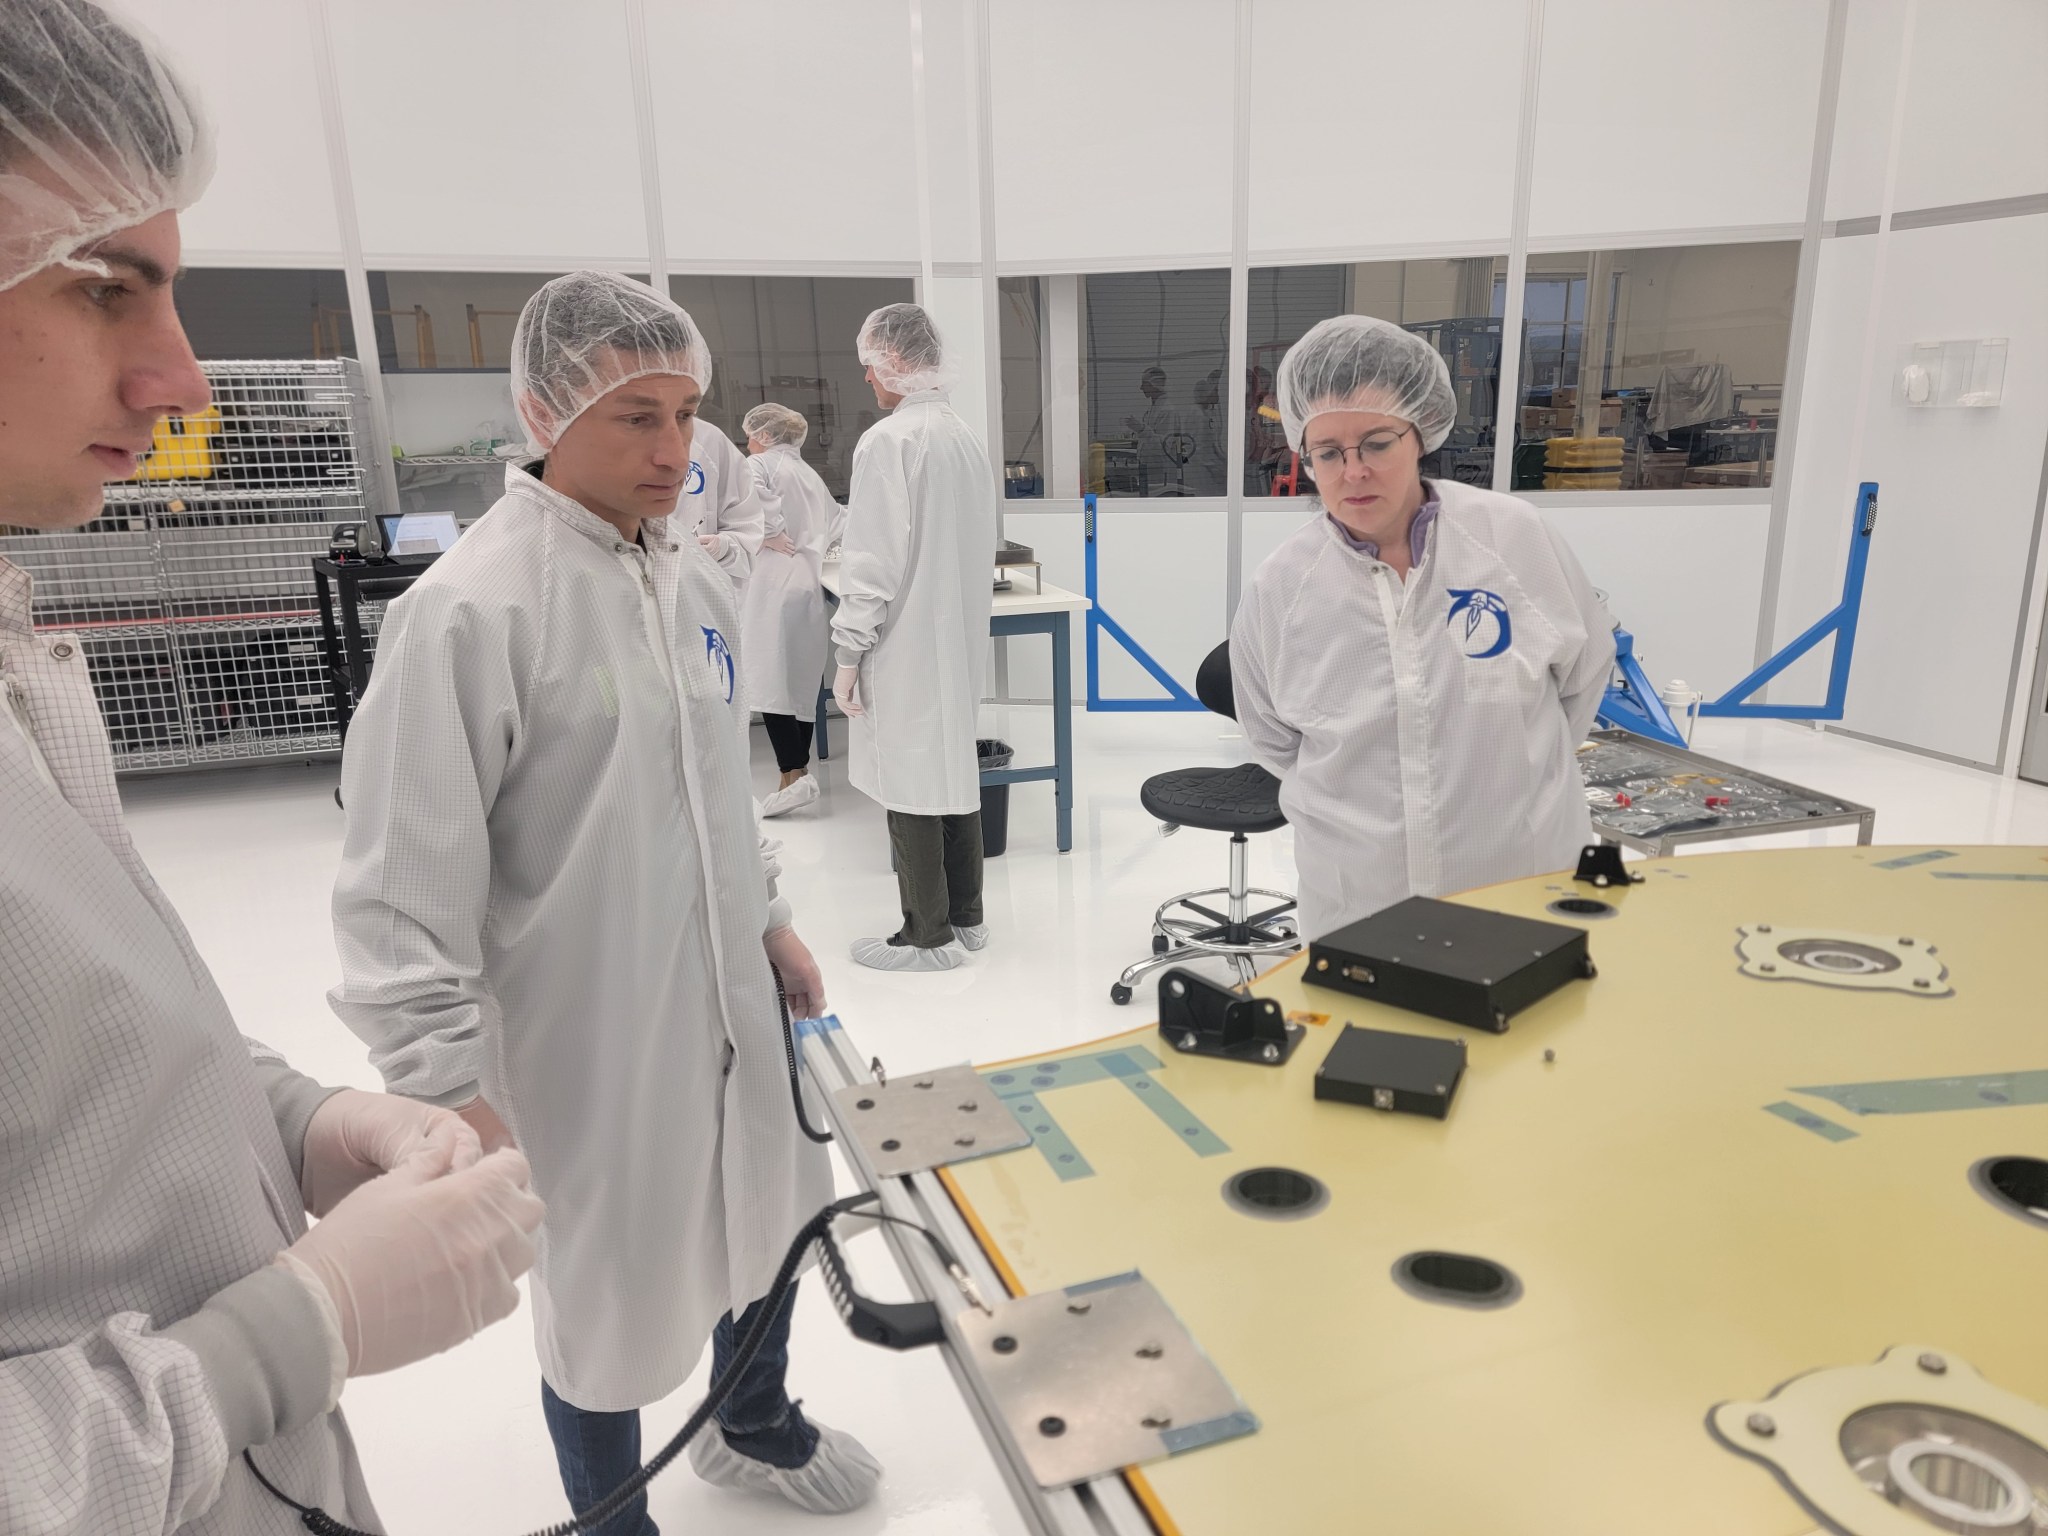 NASA, Firefly, Qascom, and ASI team members examining LuGRE hardware.